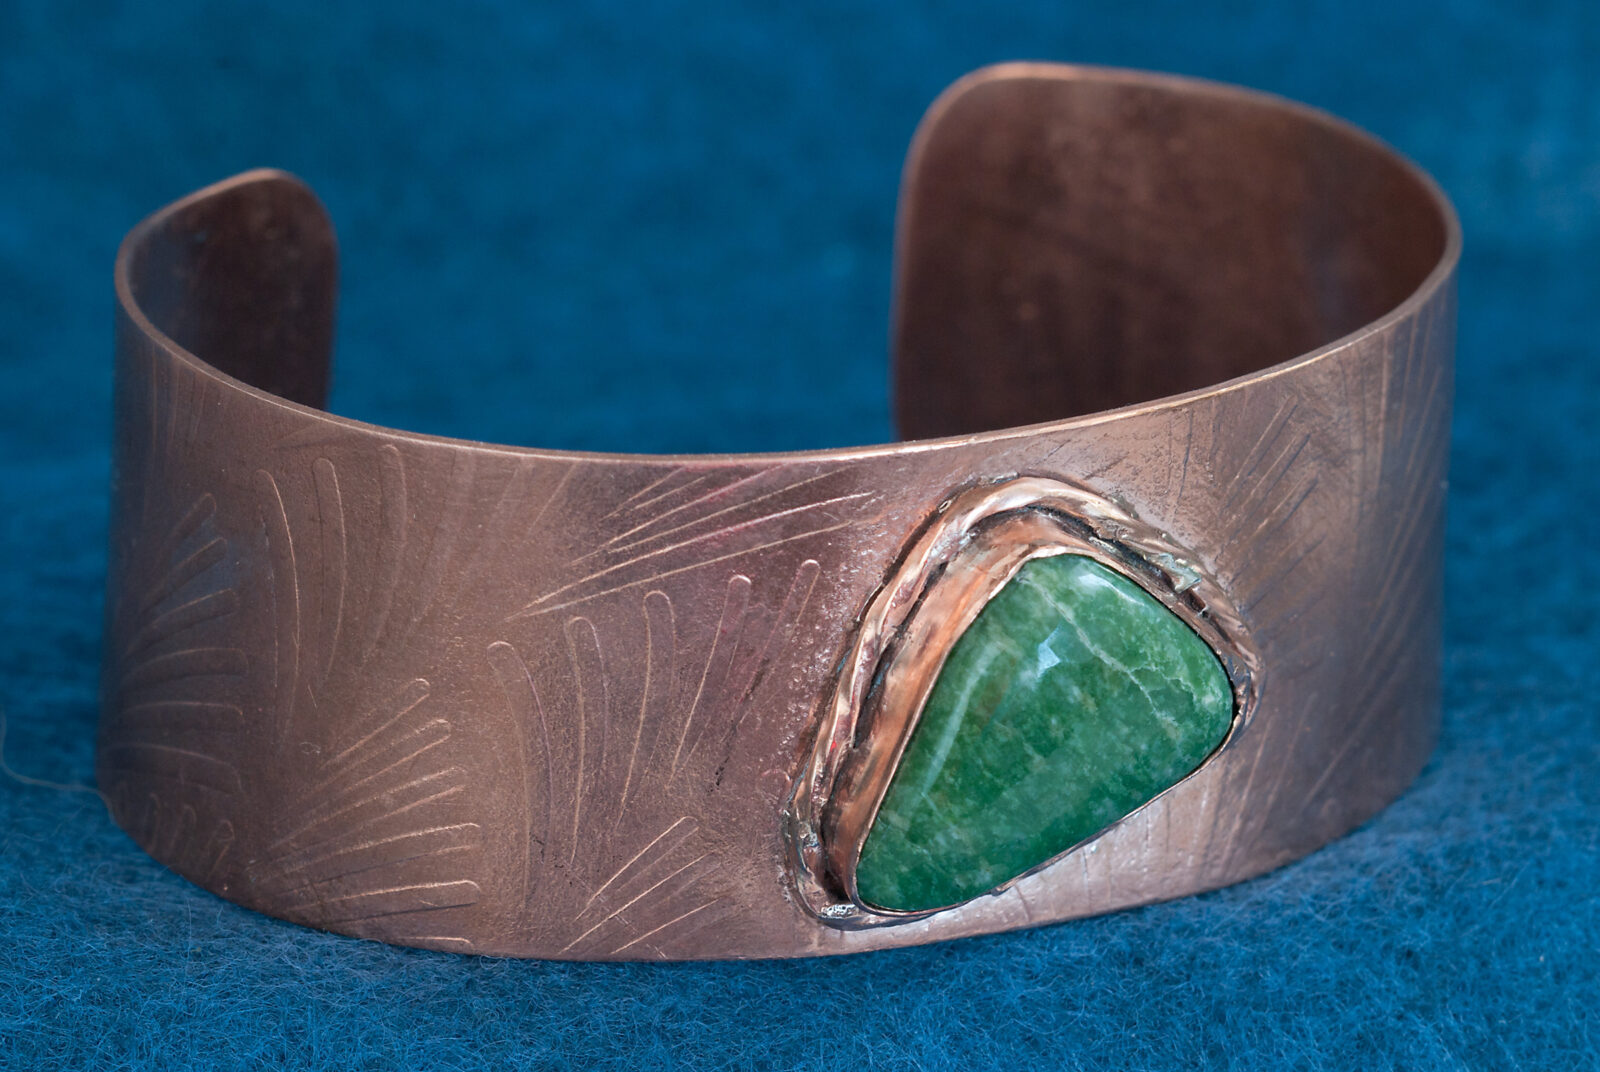 Copper cuff bracelet with green stone